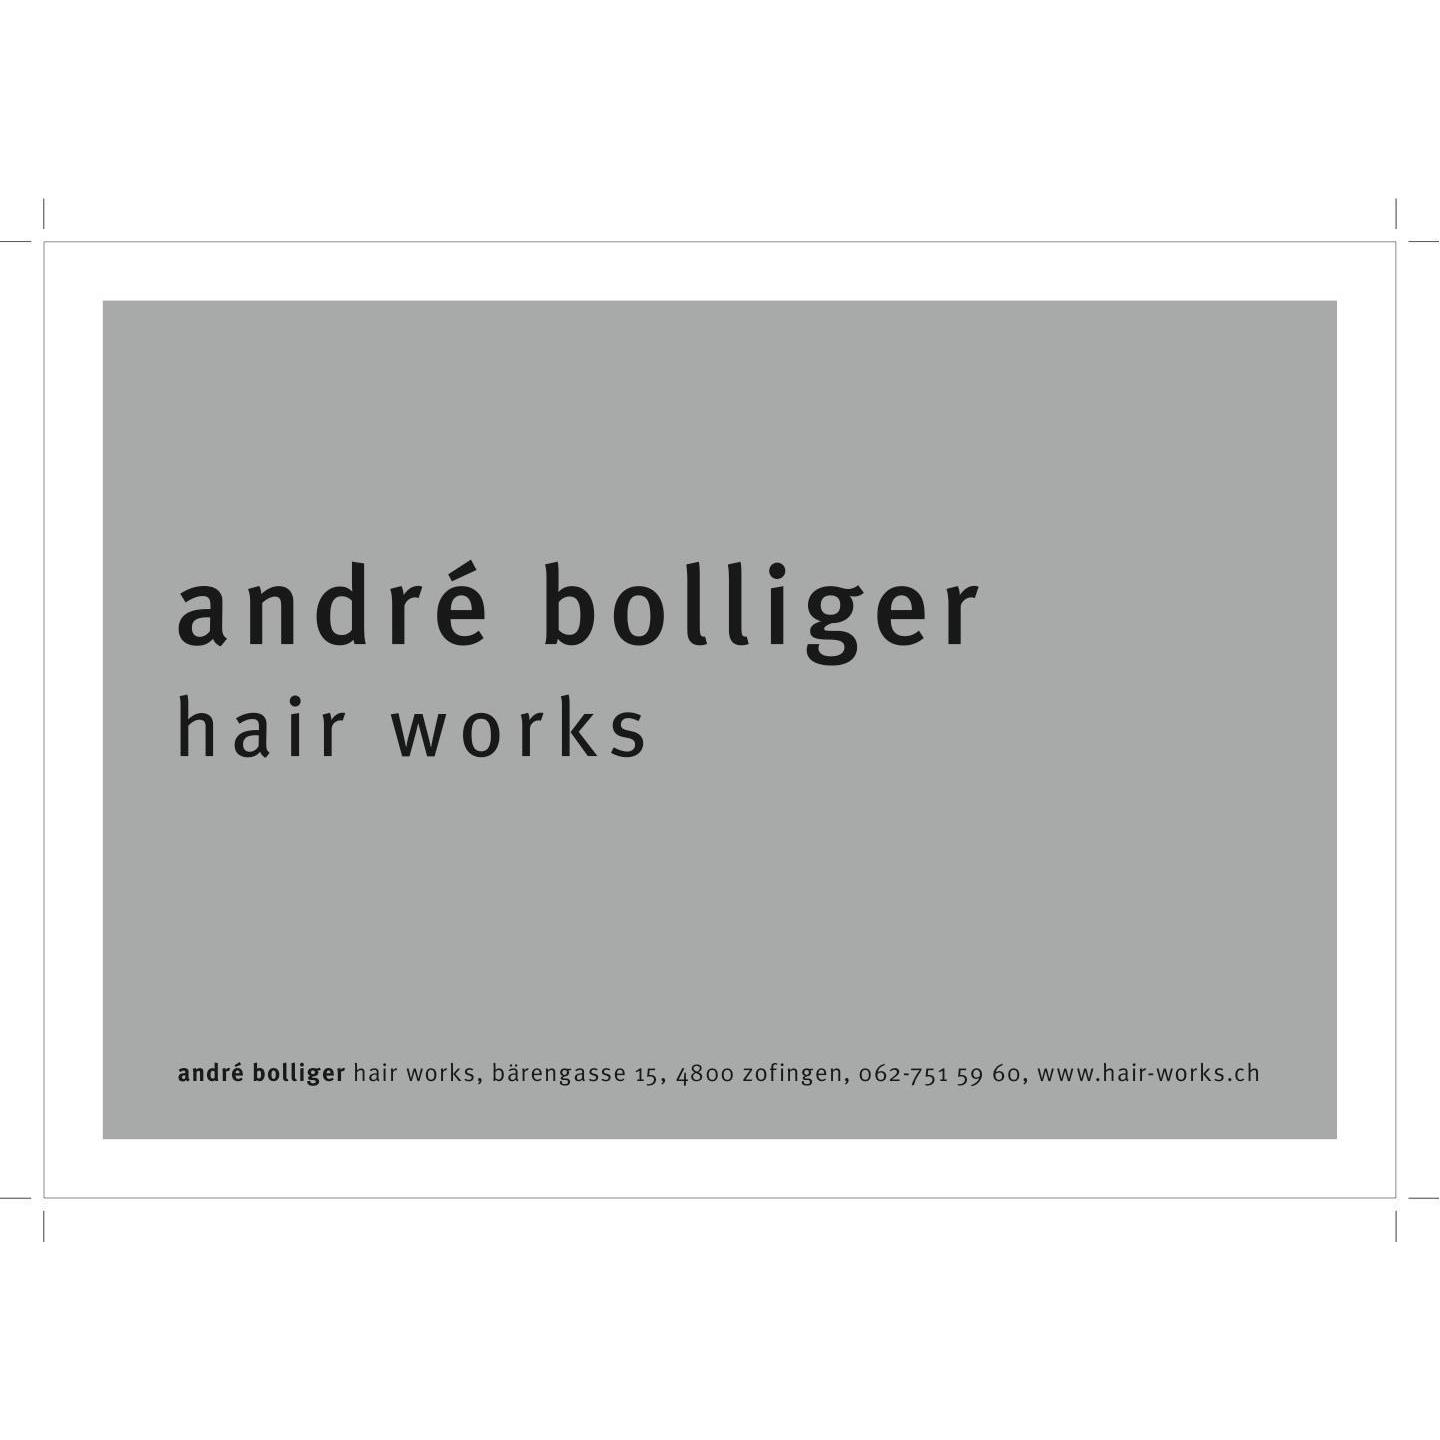 andré bolliger hair works Logo